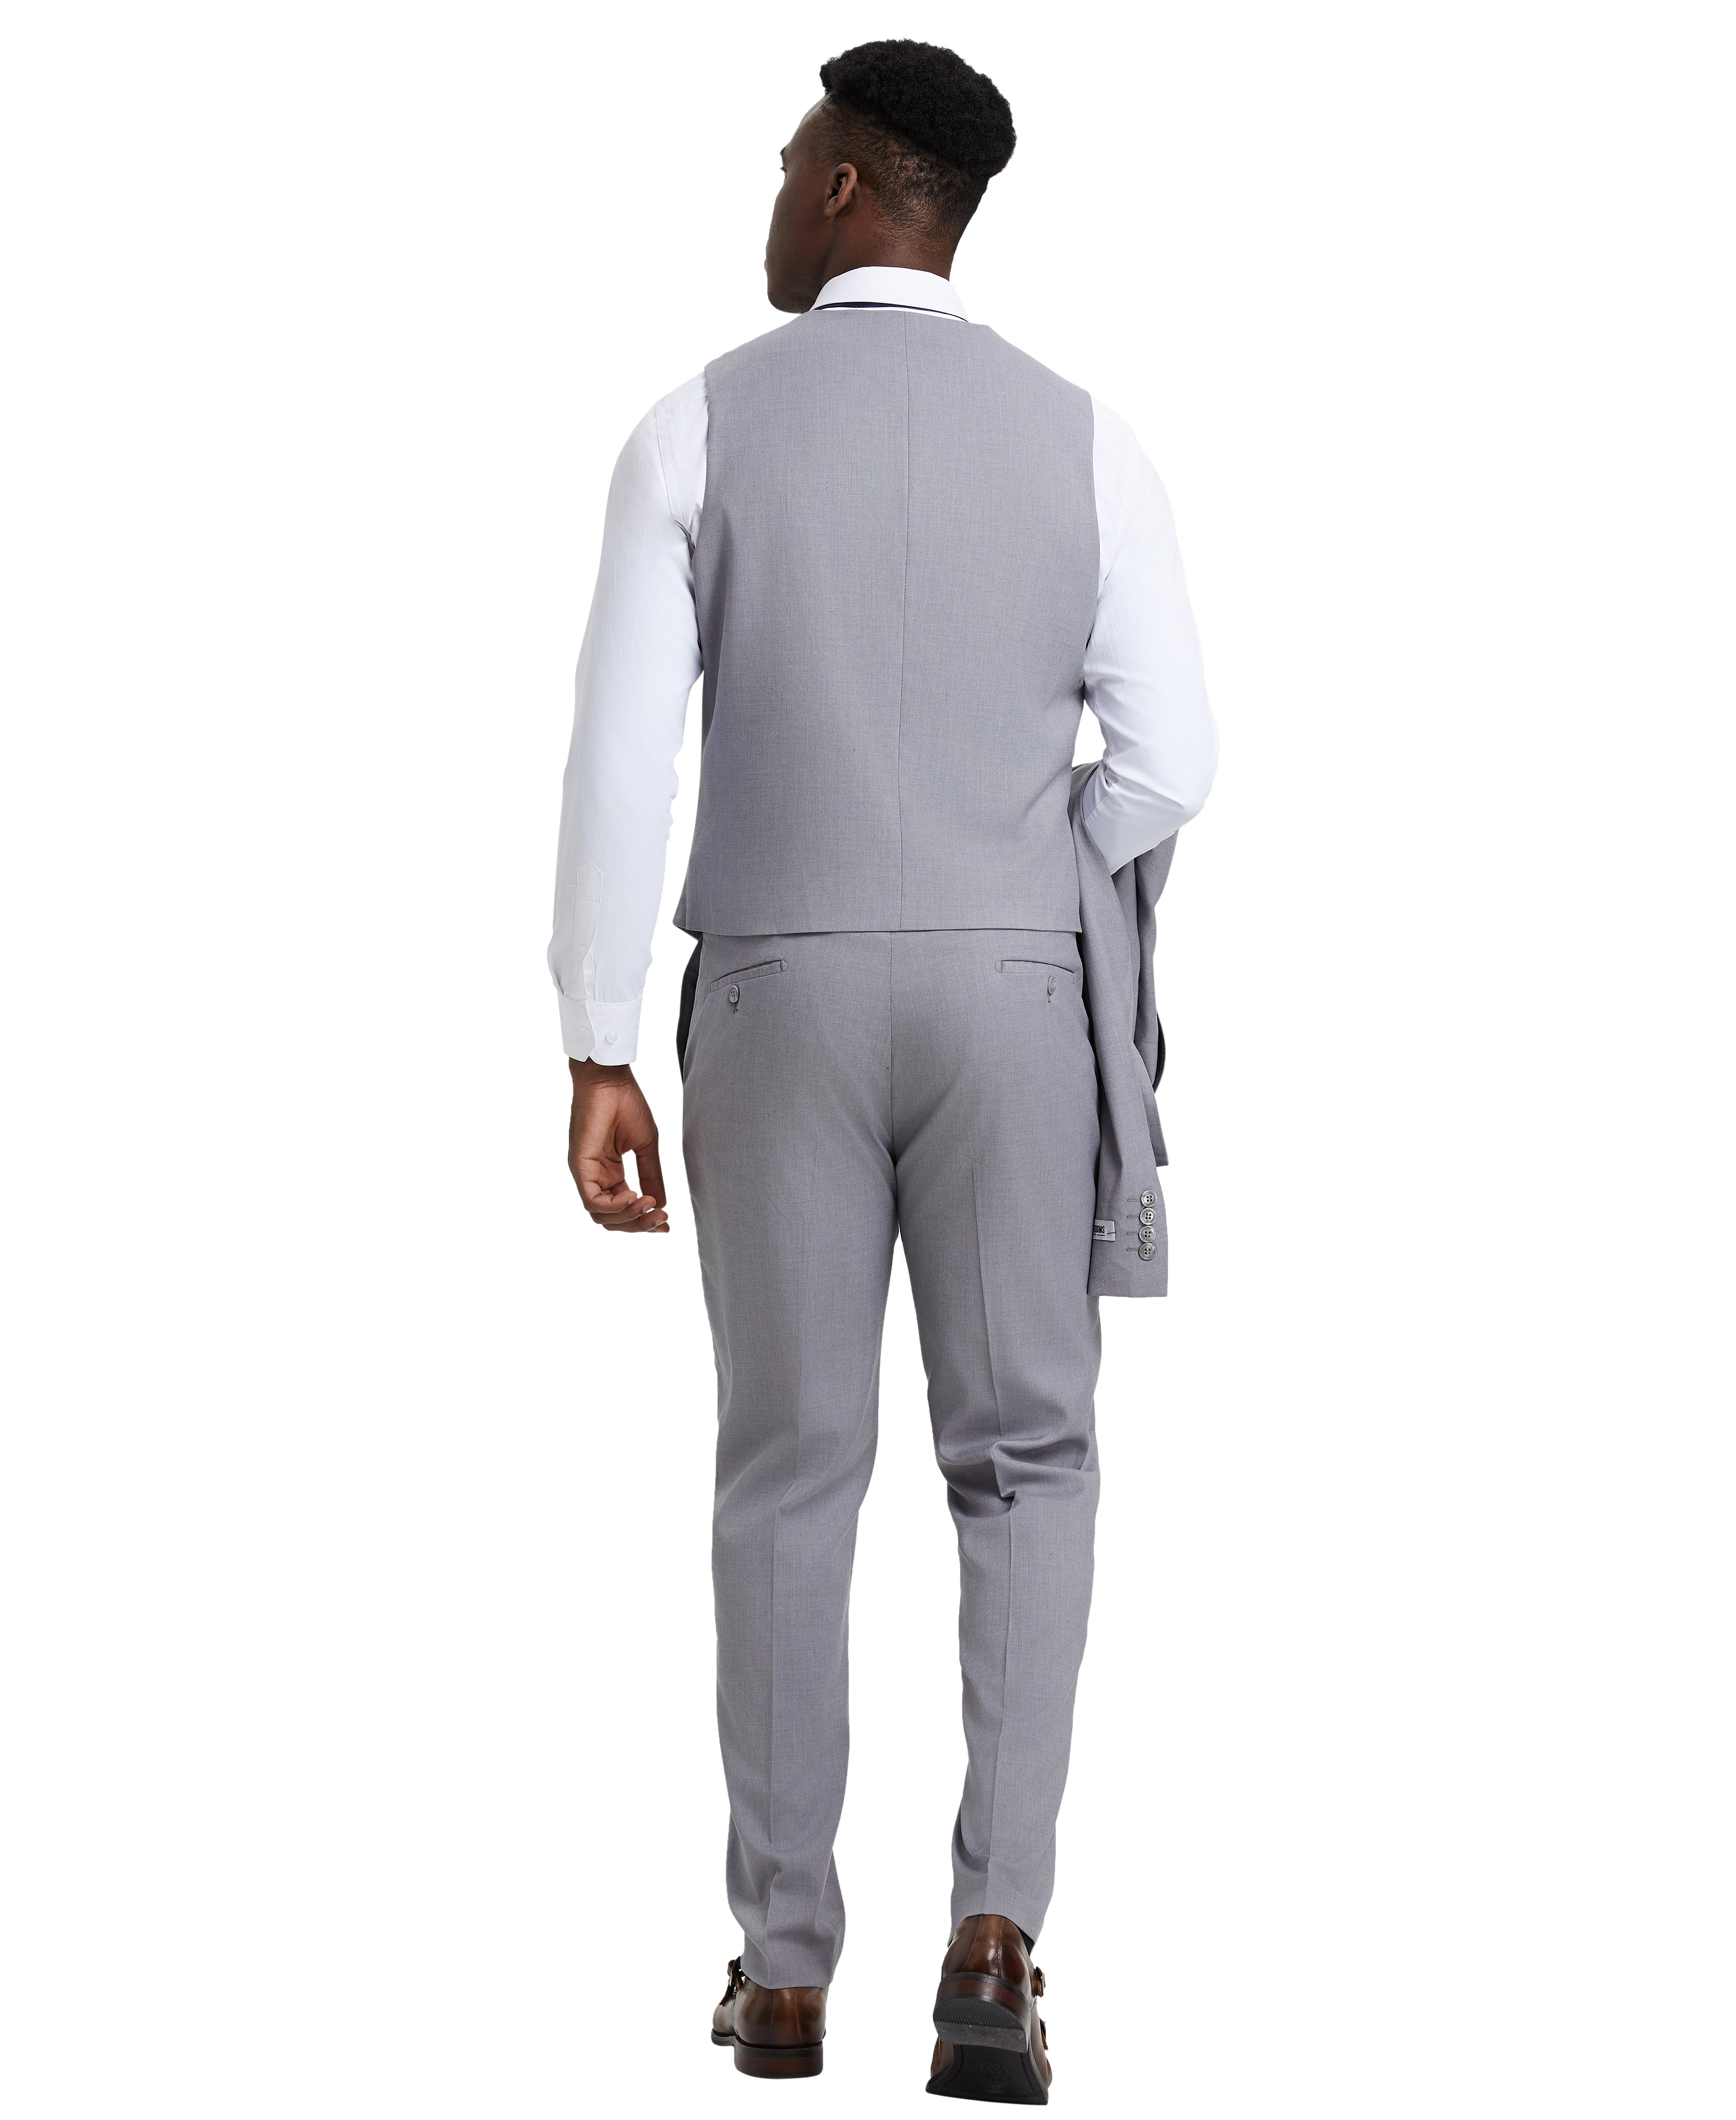 Stacy Adams Hybrid Fit U-Shaped Vested Suit, Dove Grey